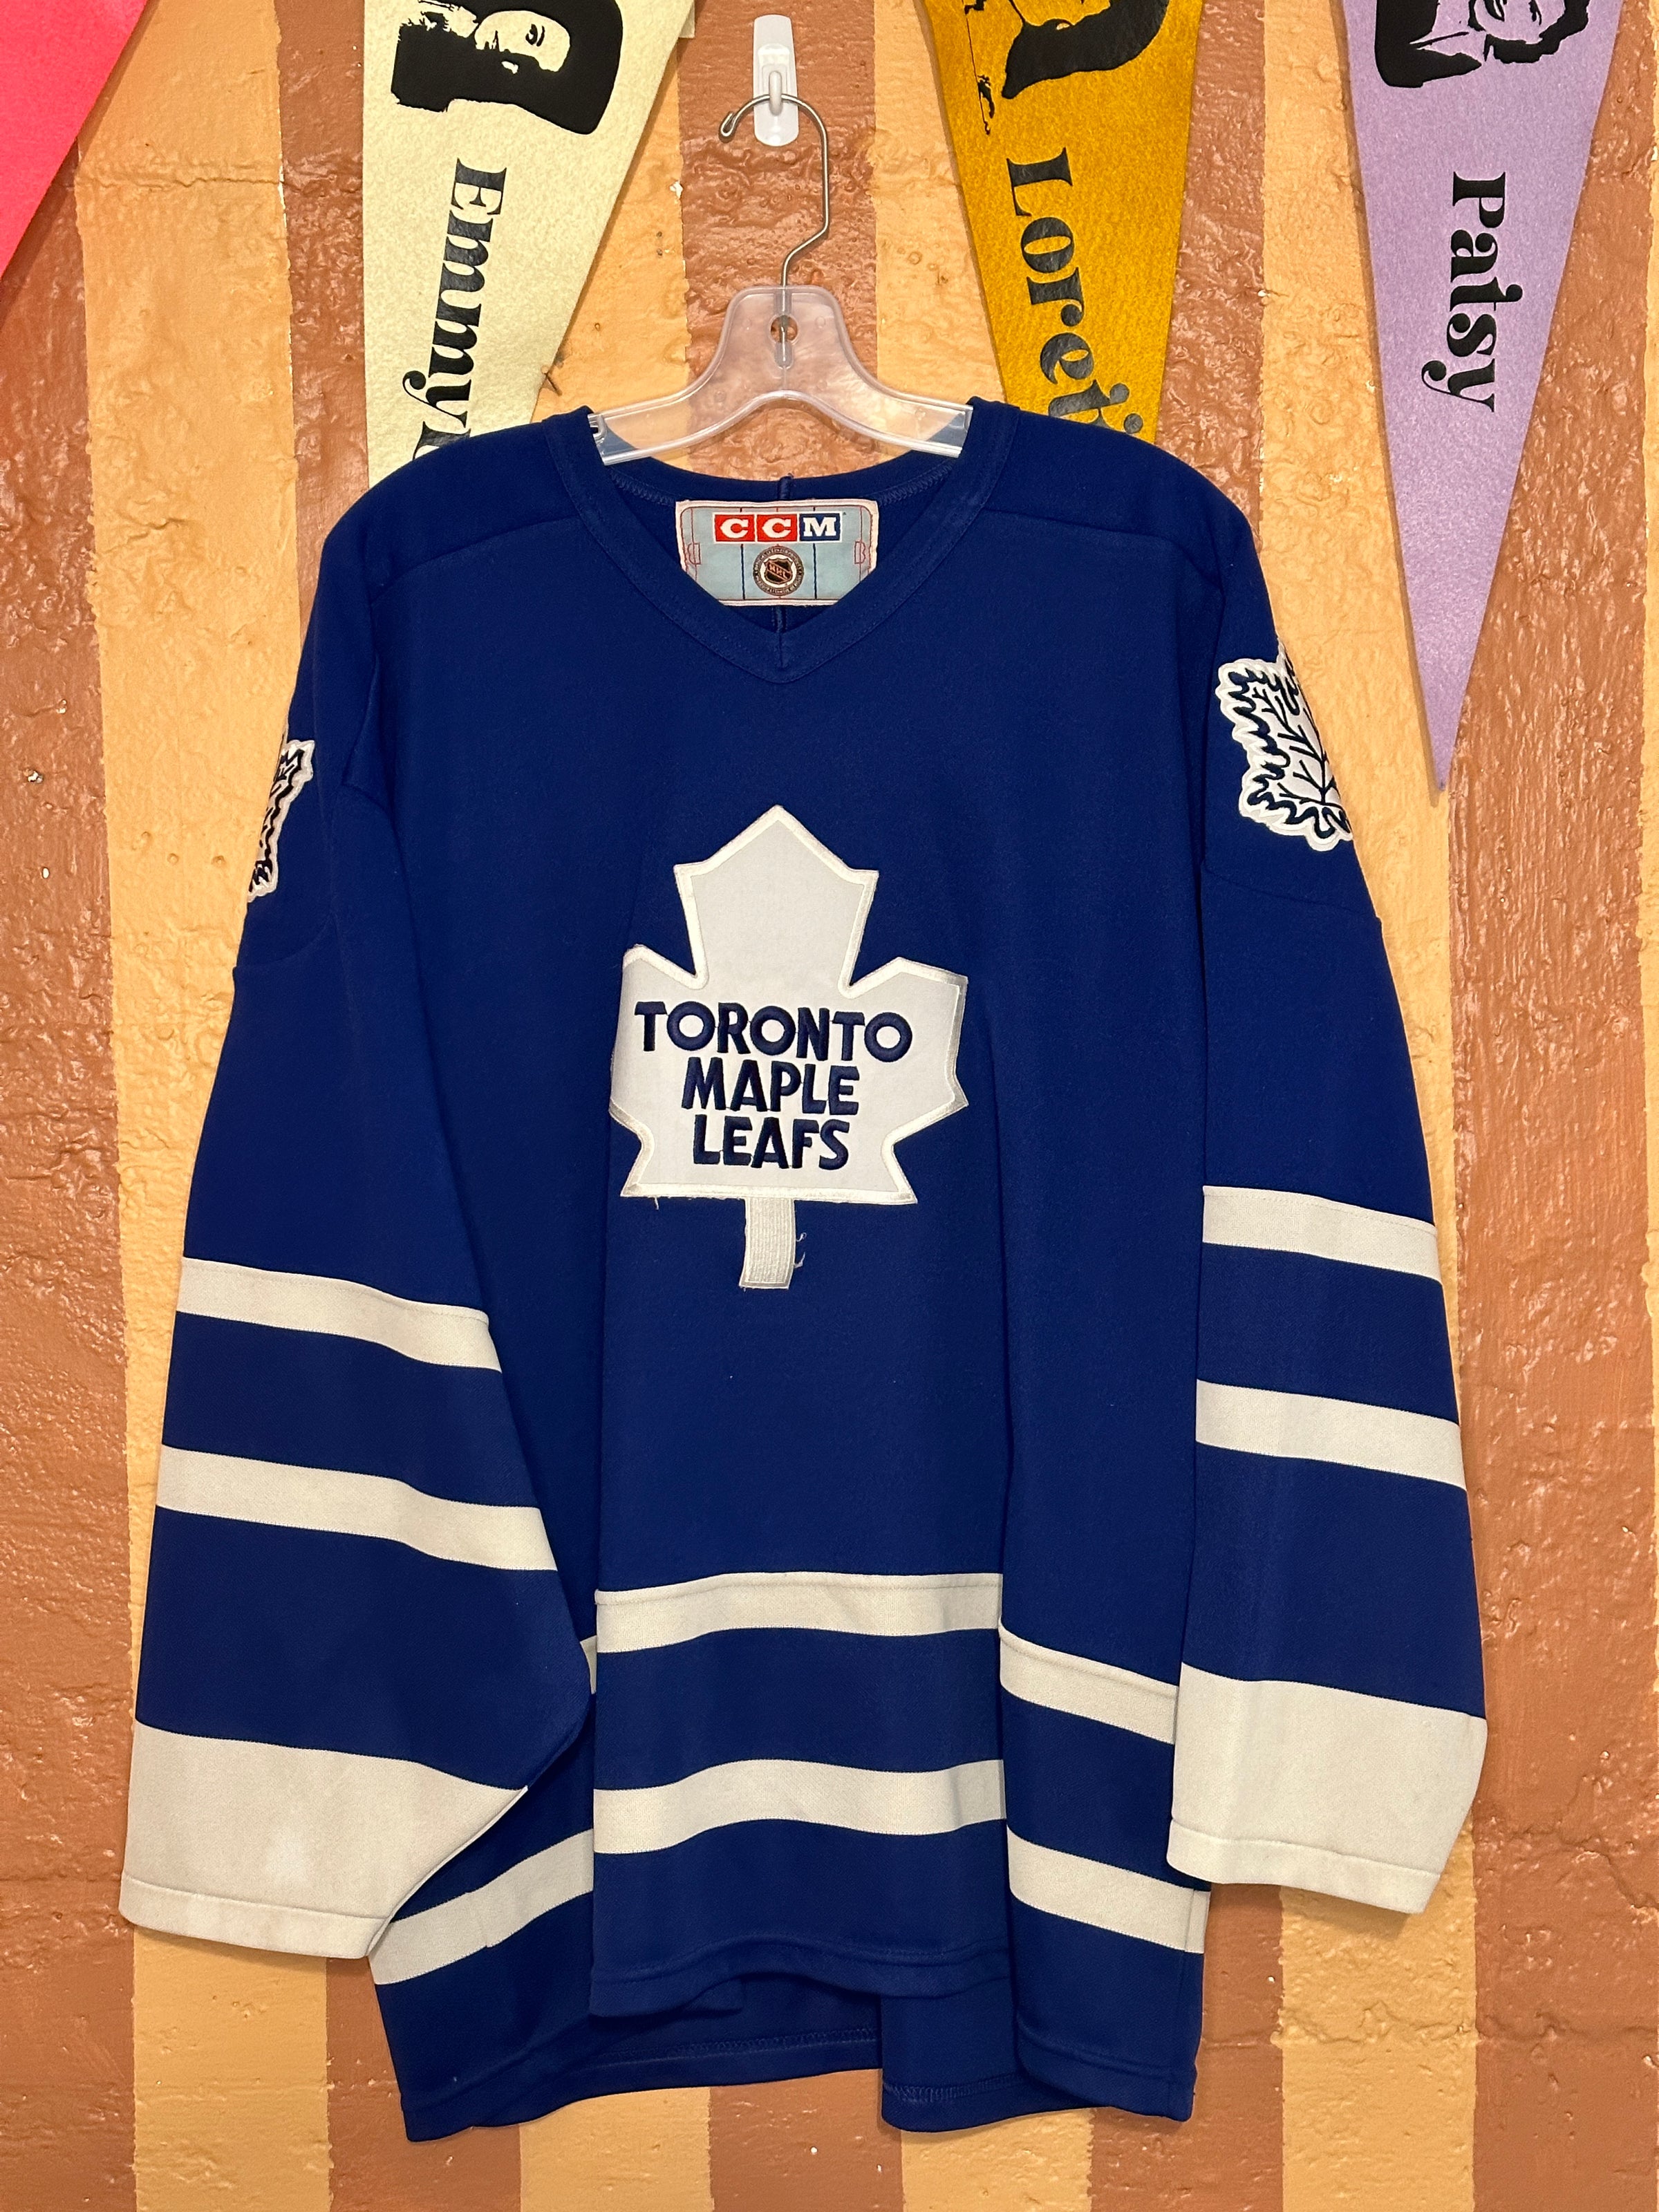 NHL Pro Vintage NHL CCM Toronto Maple Leafs Jersey!! #13 